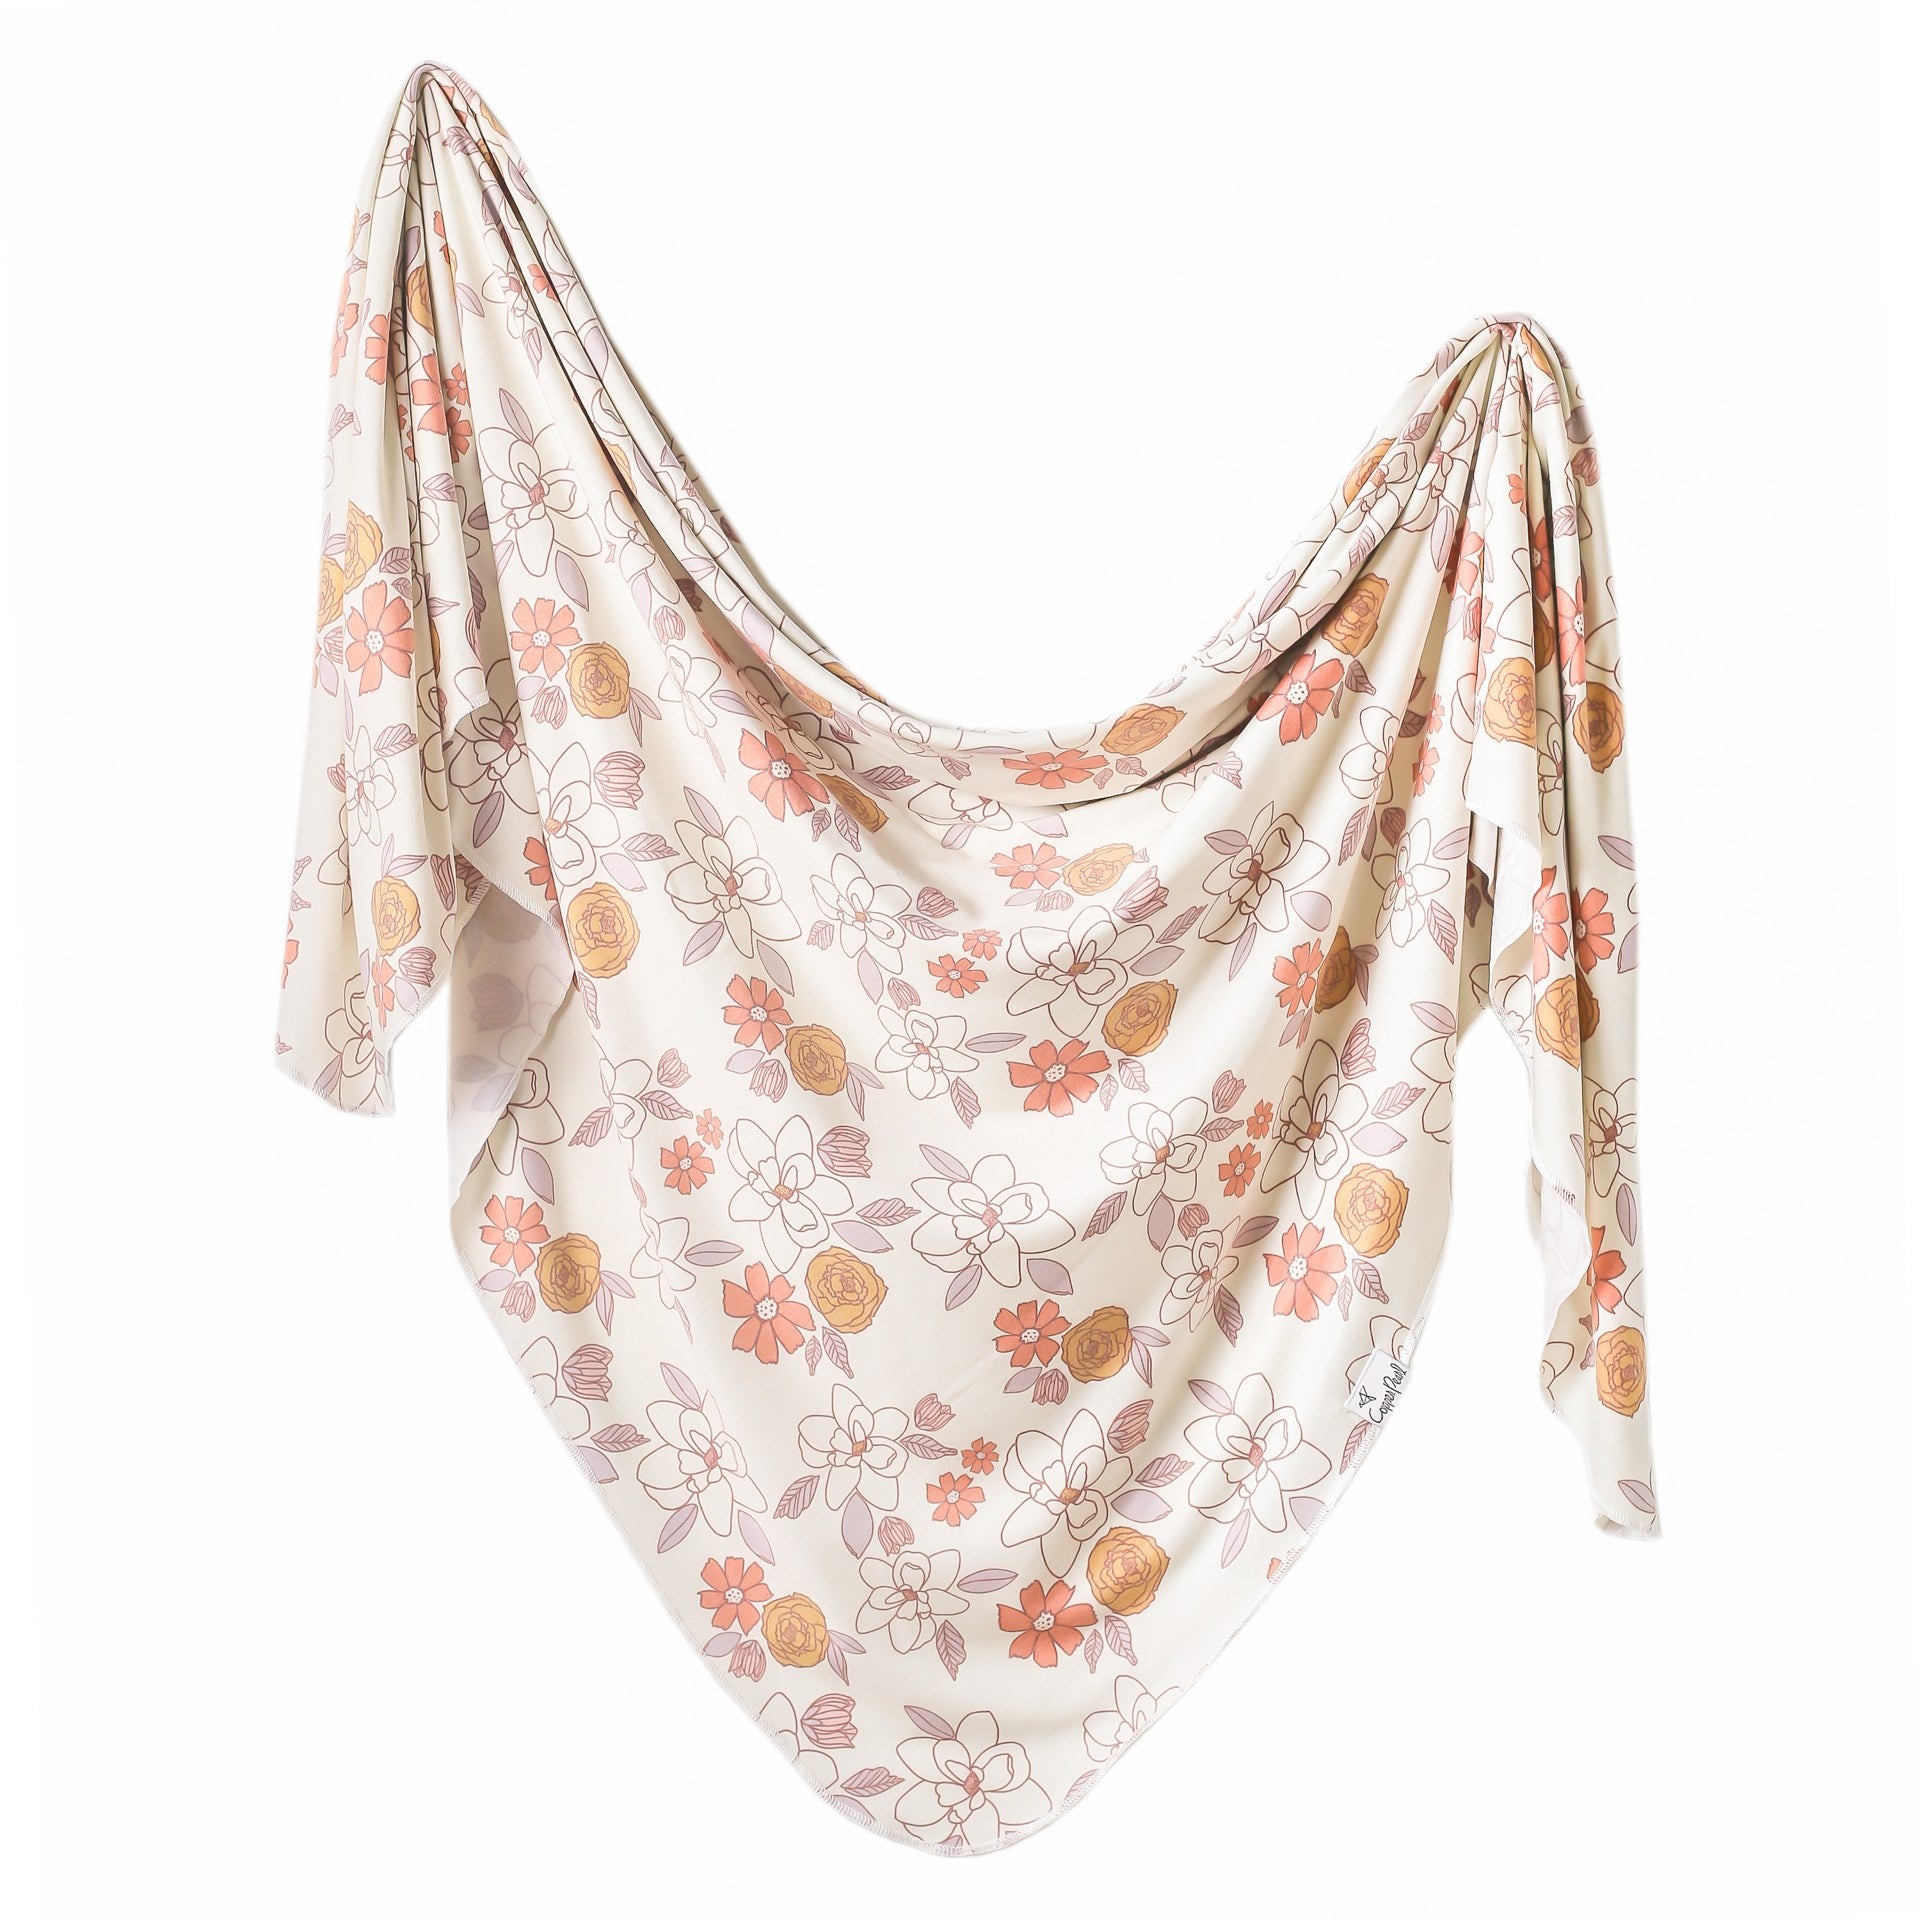 [Copper Pearl] Knit Swaddle Blanket